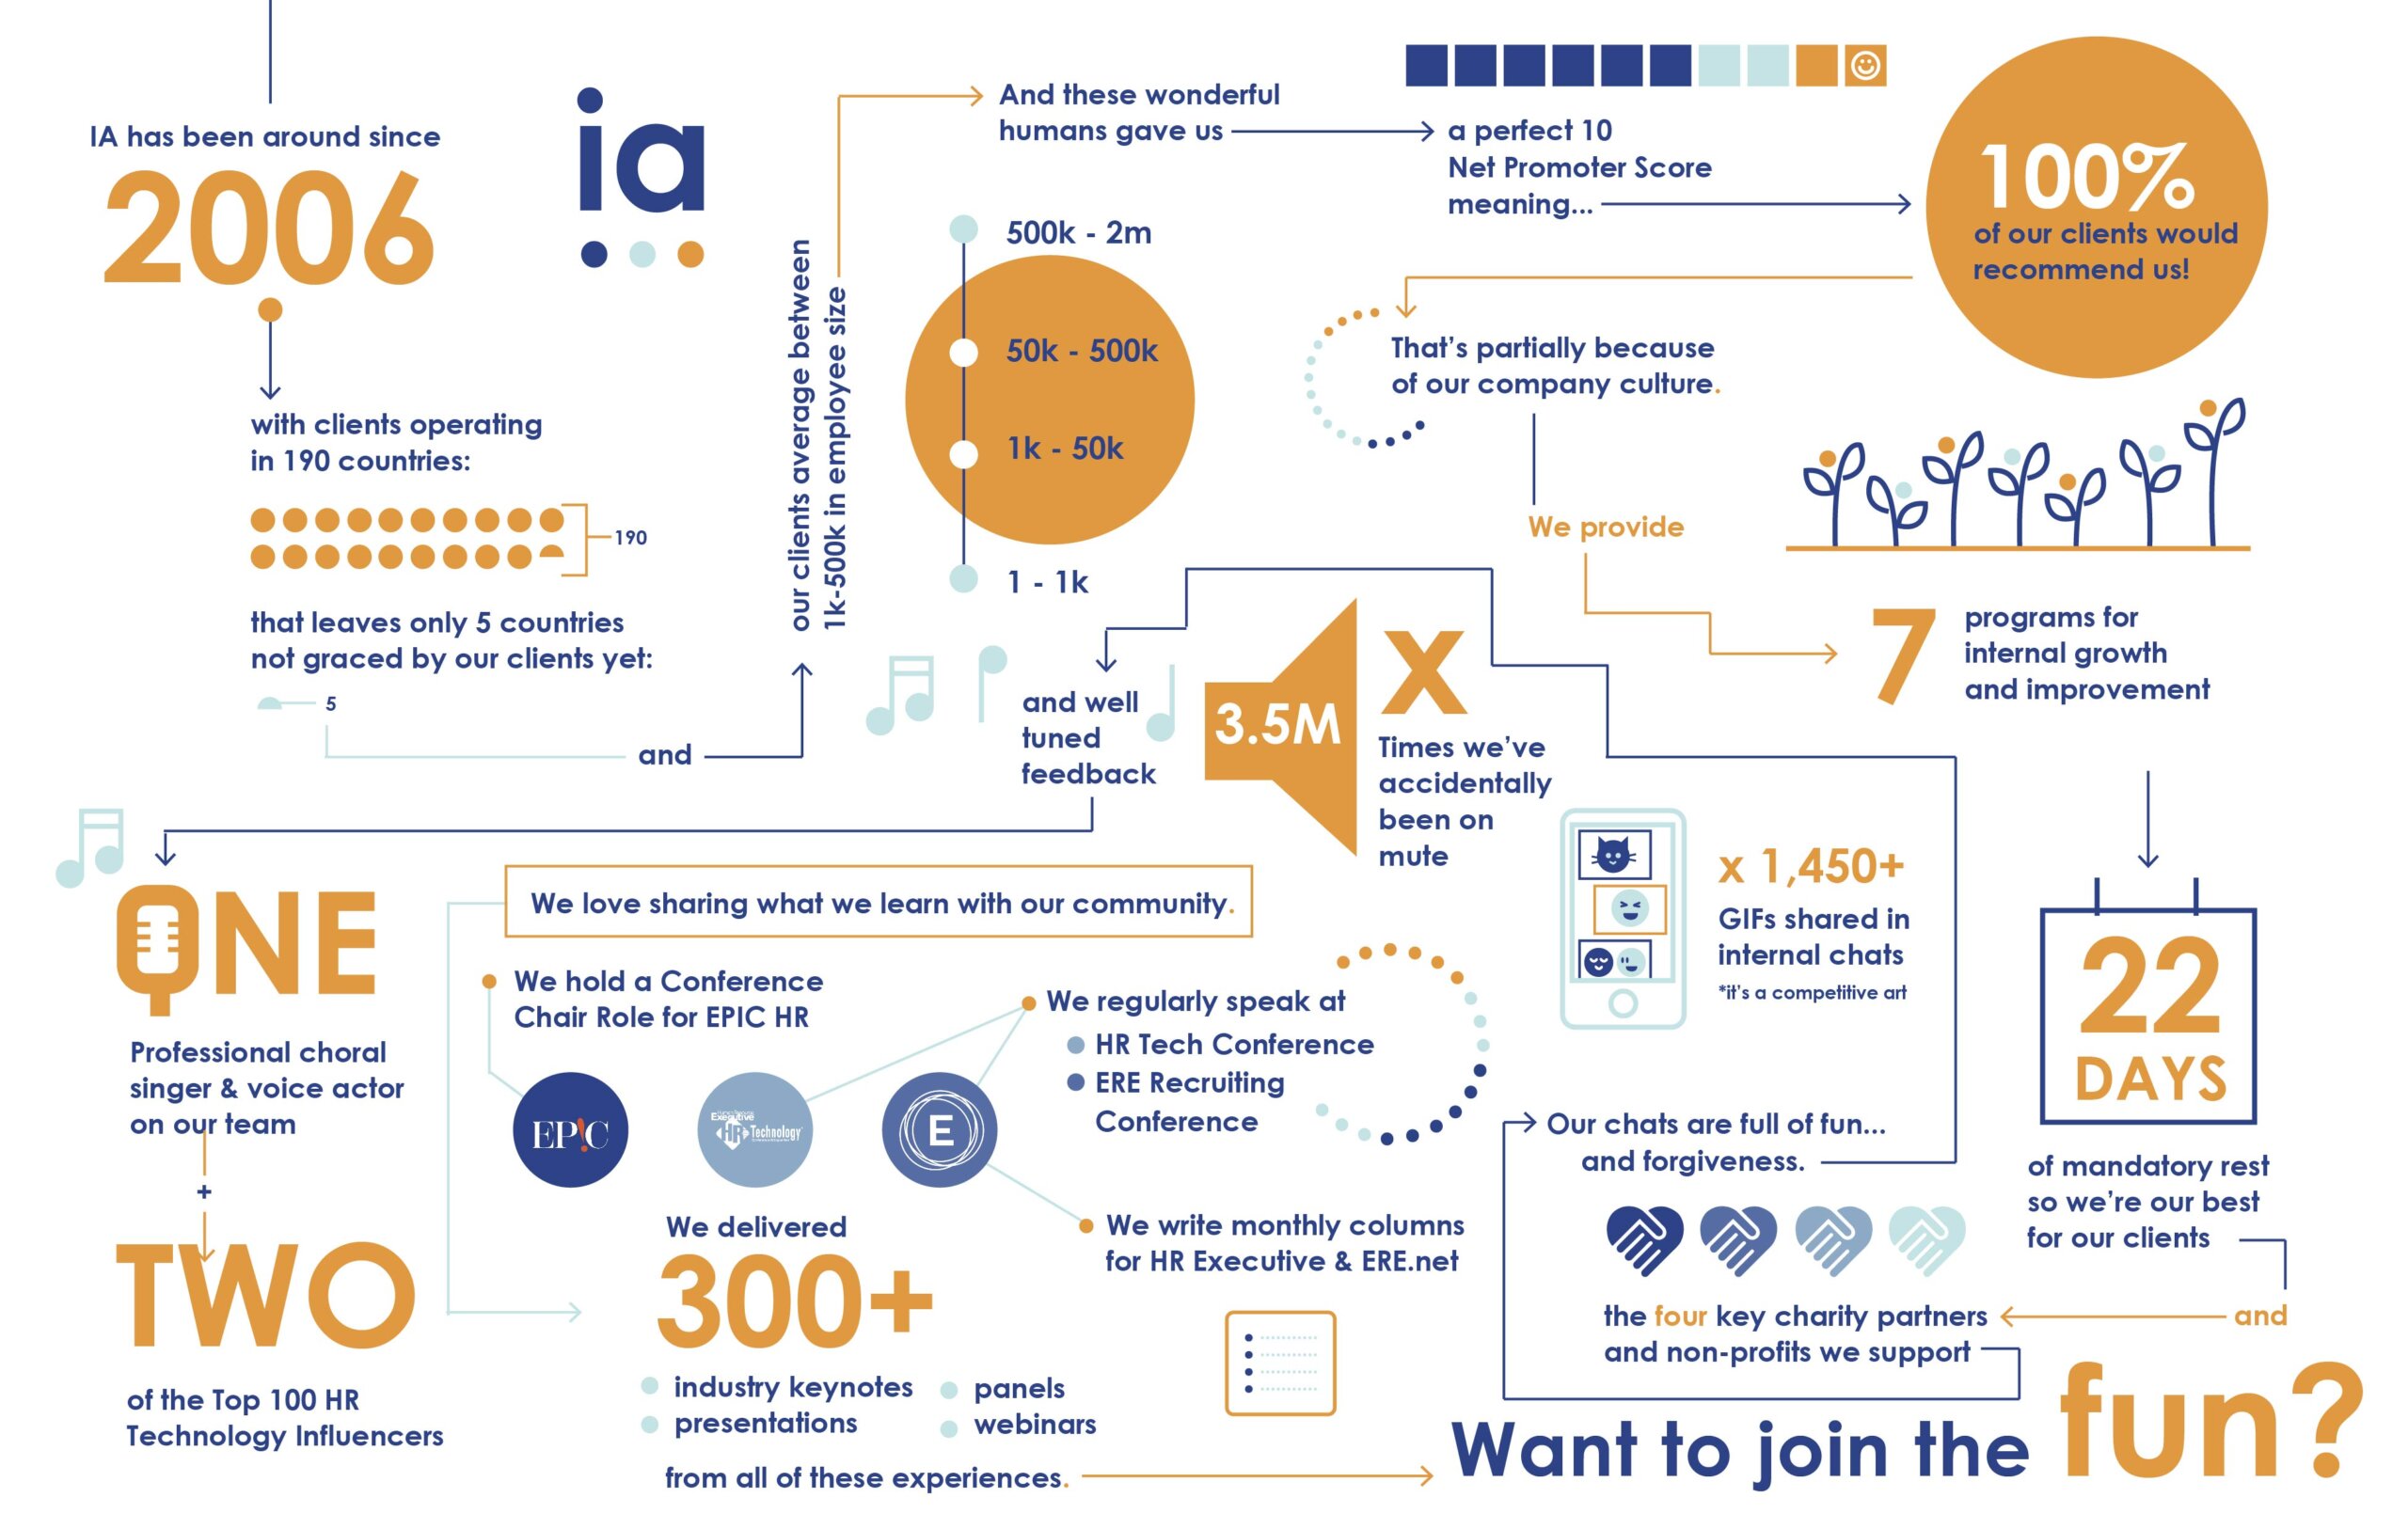 infographic of IA HR consulting denoting significant milestones